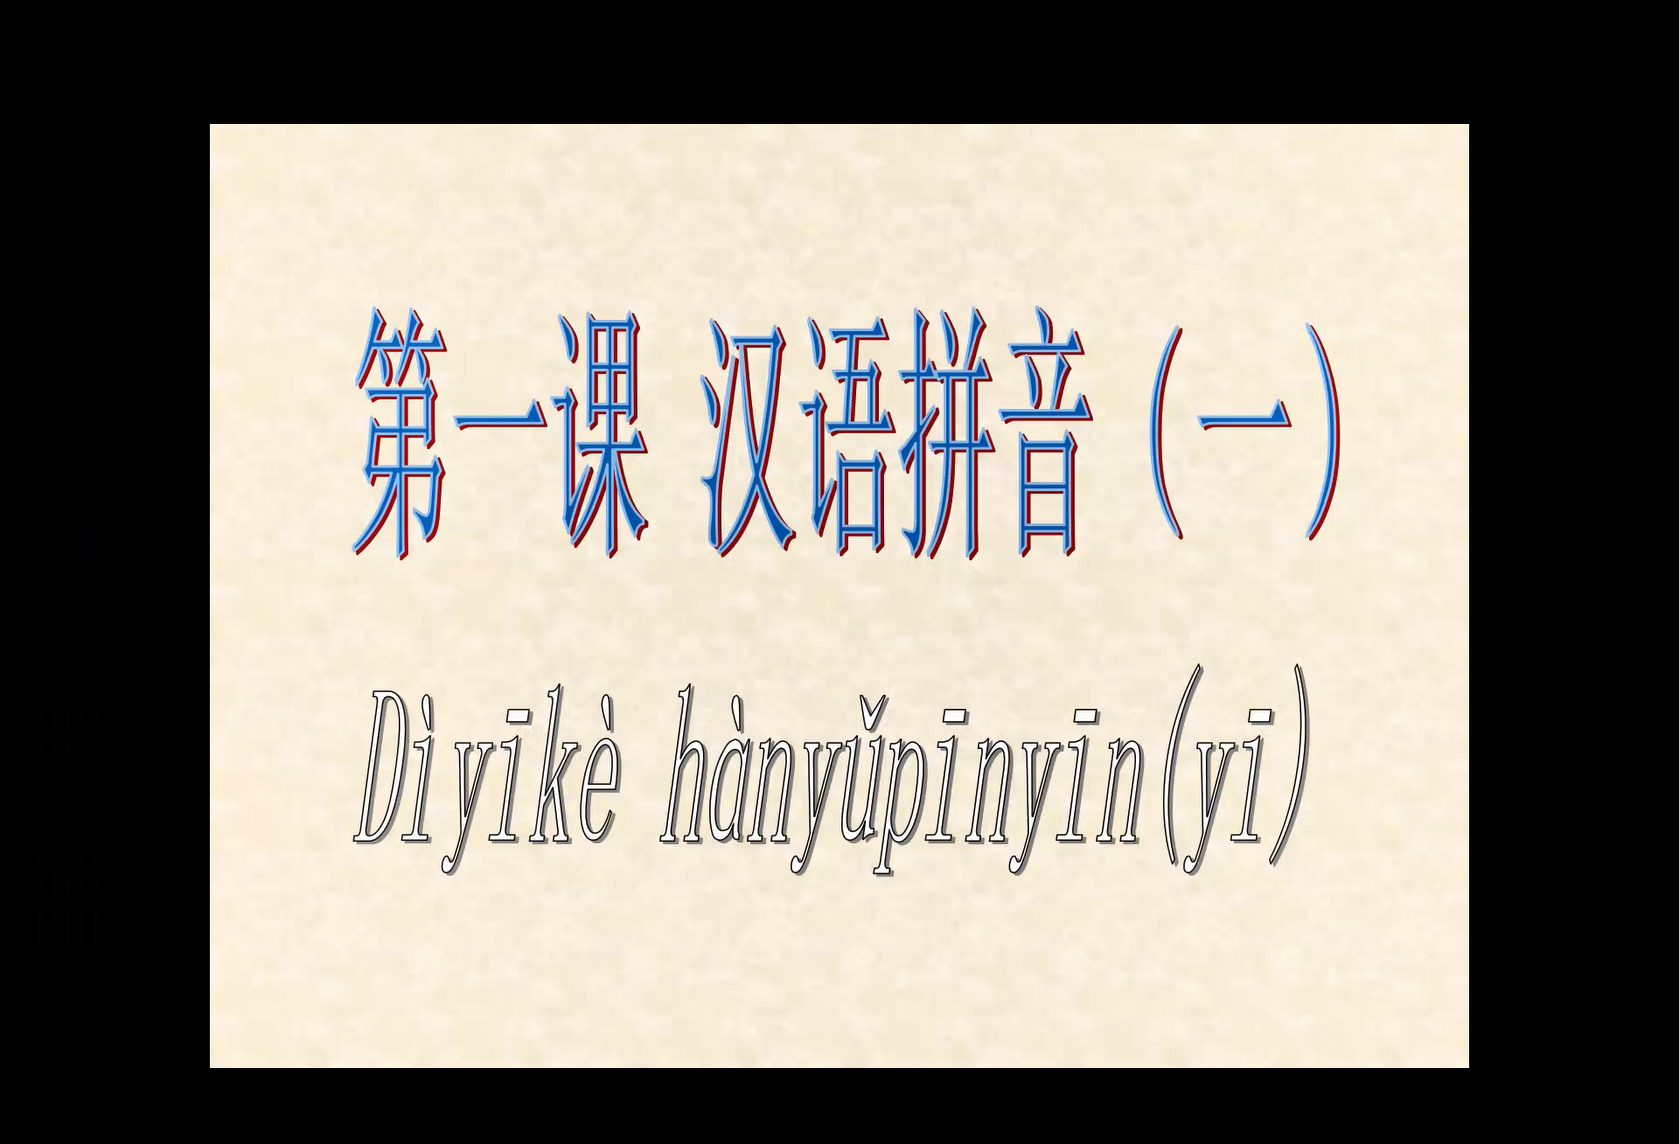 Chinese pinyin